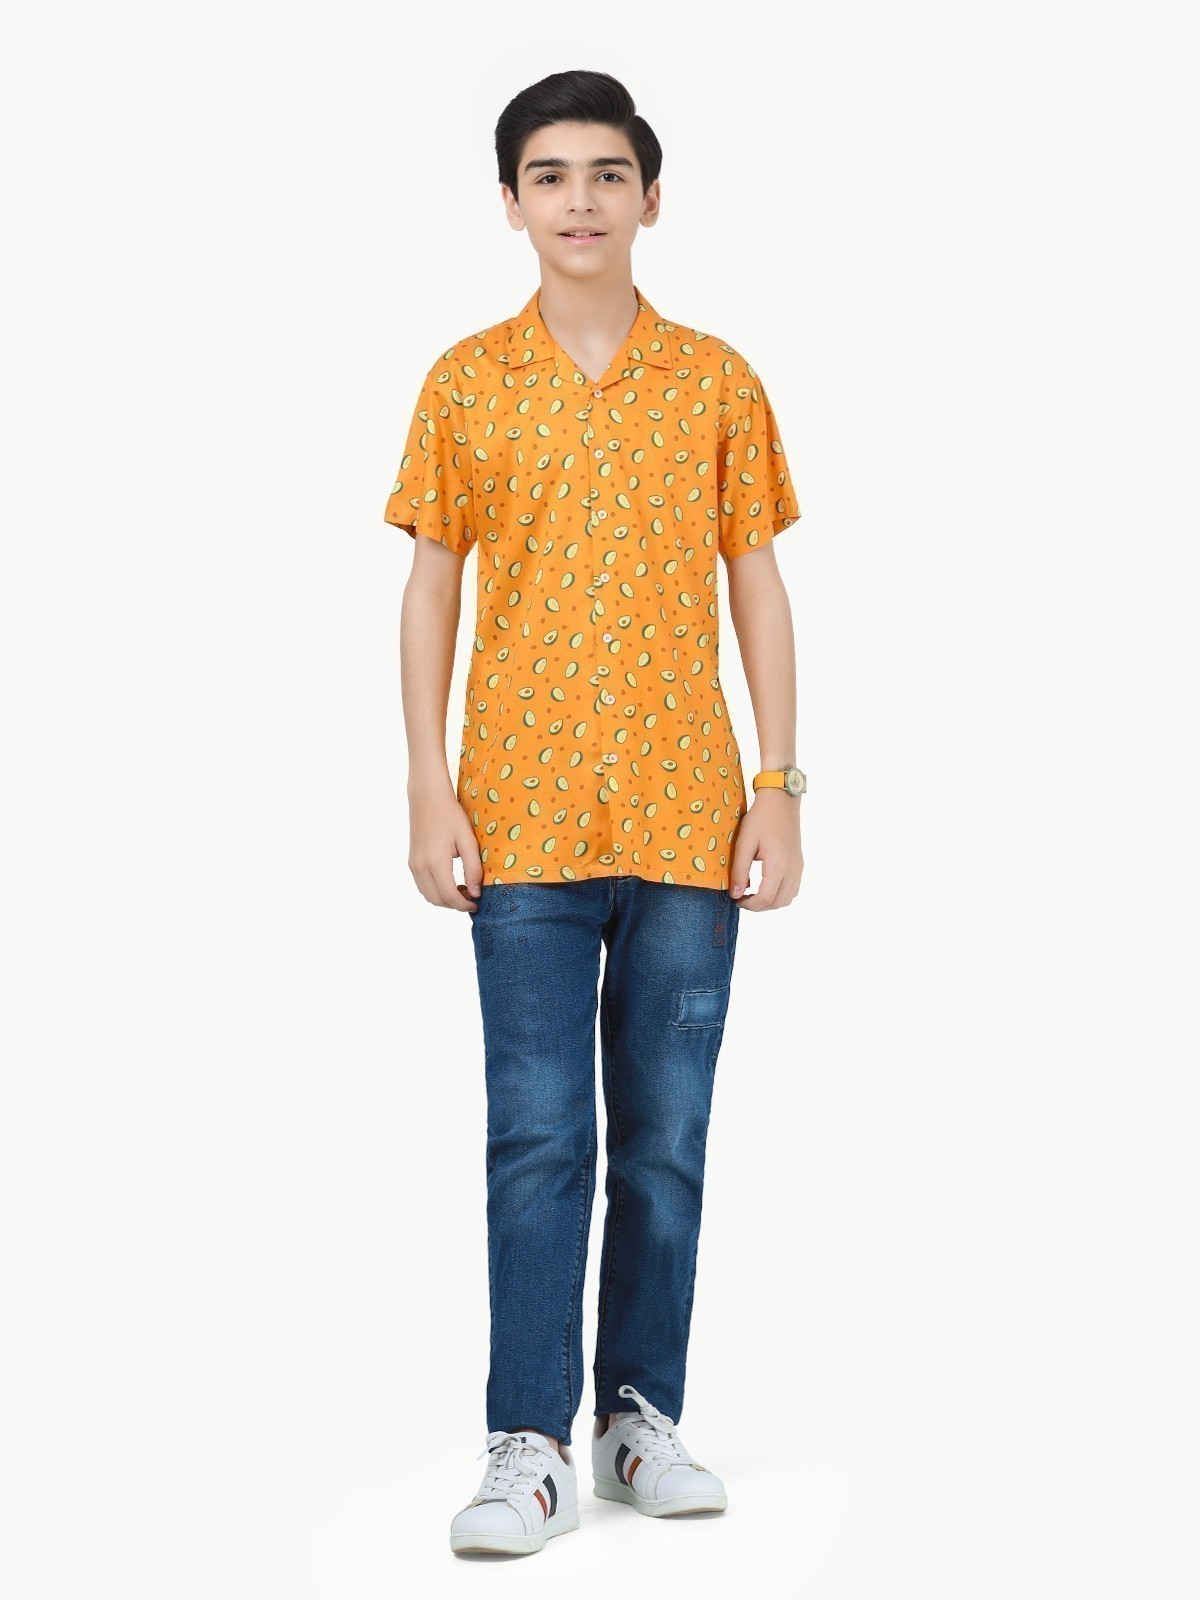 Boy's Orange Shirt - EBTS22-27431